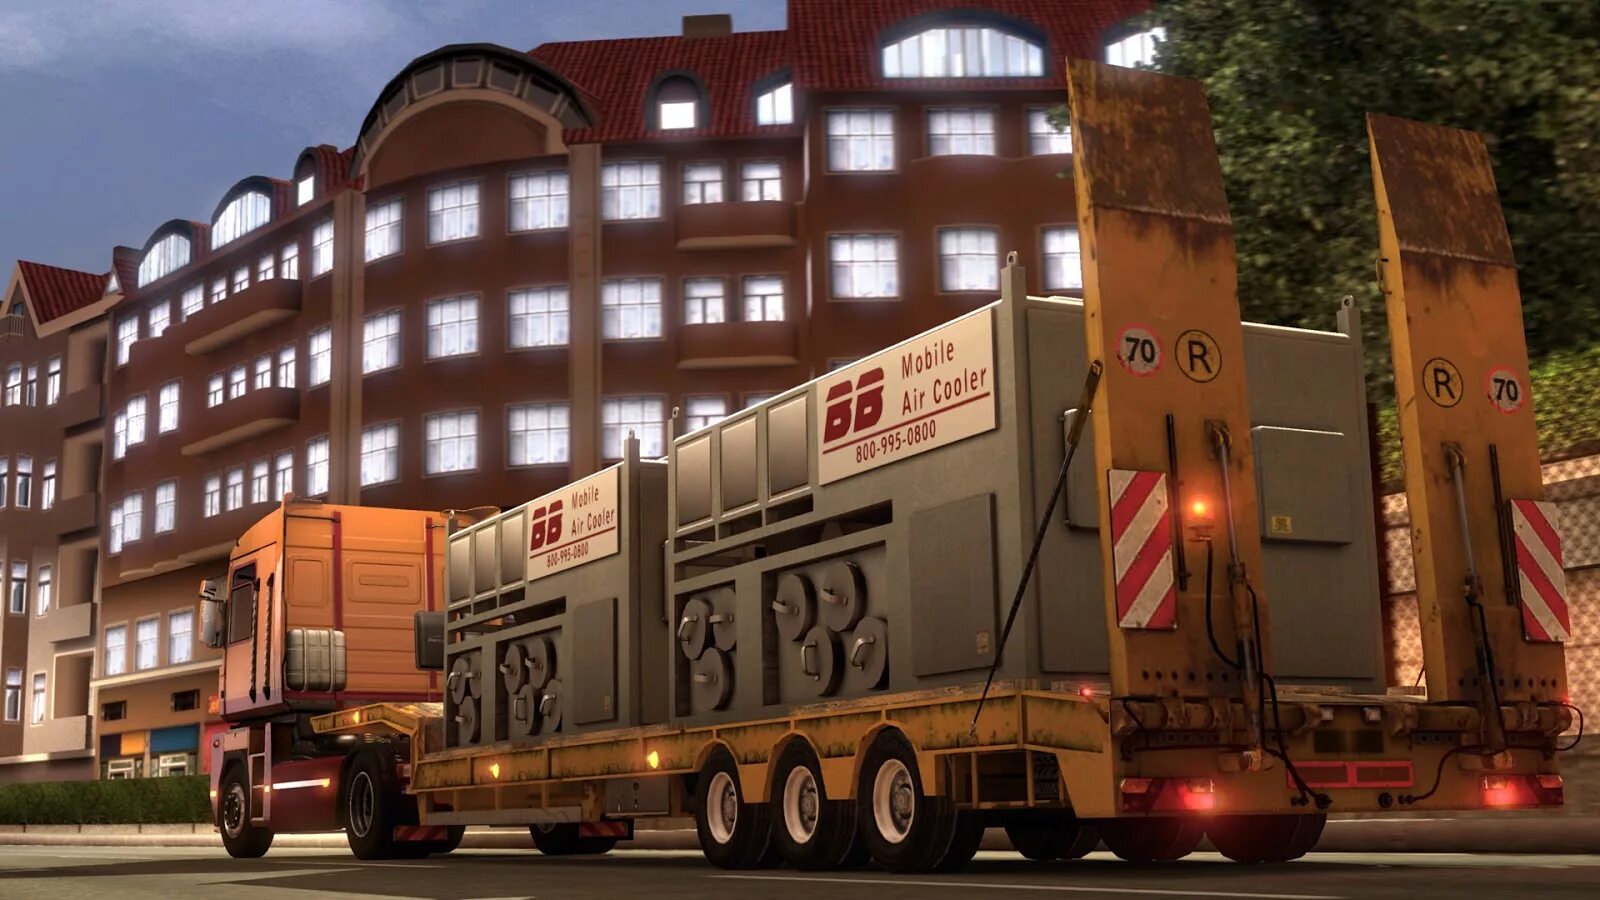 High Power Cargo Pack. Euro Truck Simulator 2 Higer. Euro Truck Simulator 2 - High Power Cargo Pack. DLC: High Power Pack.